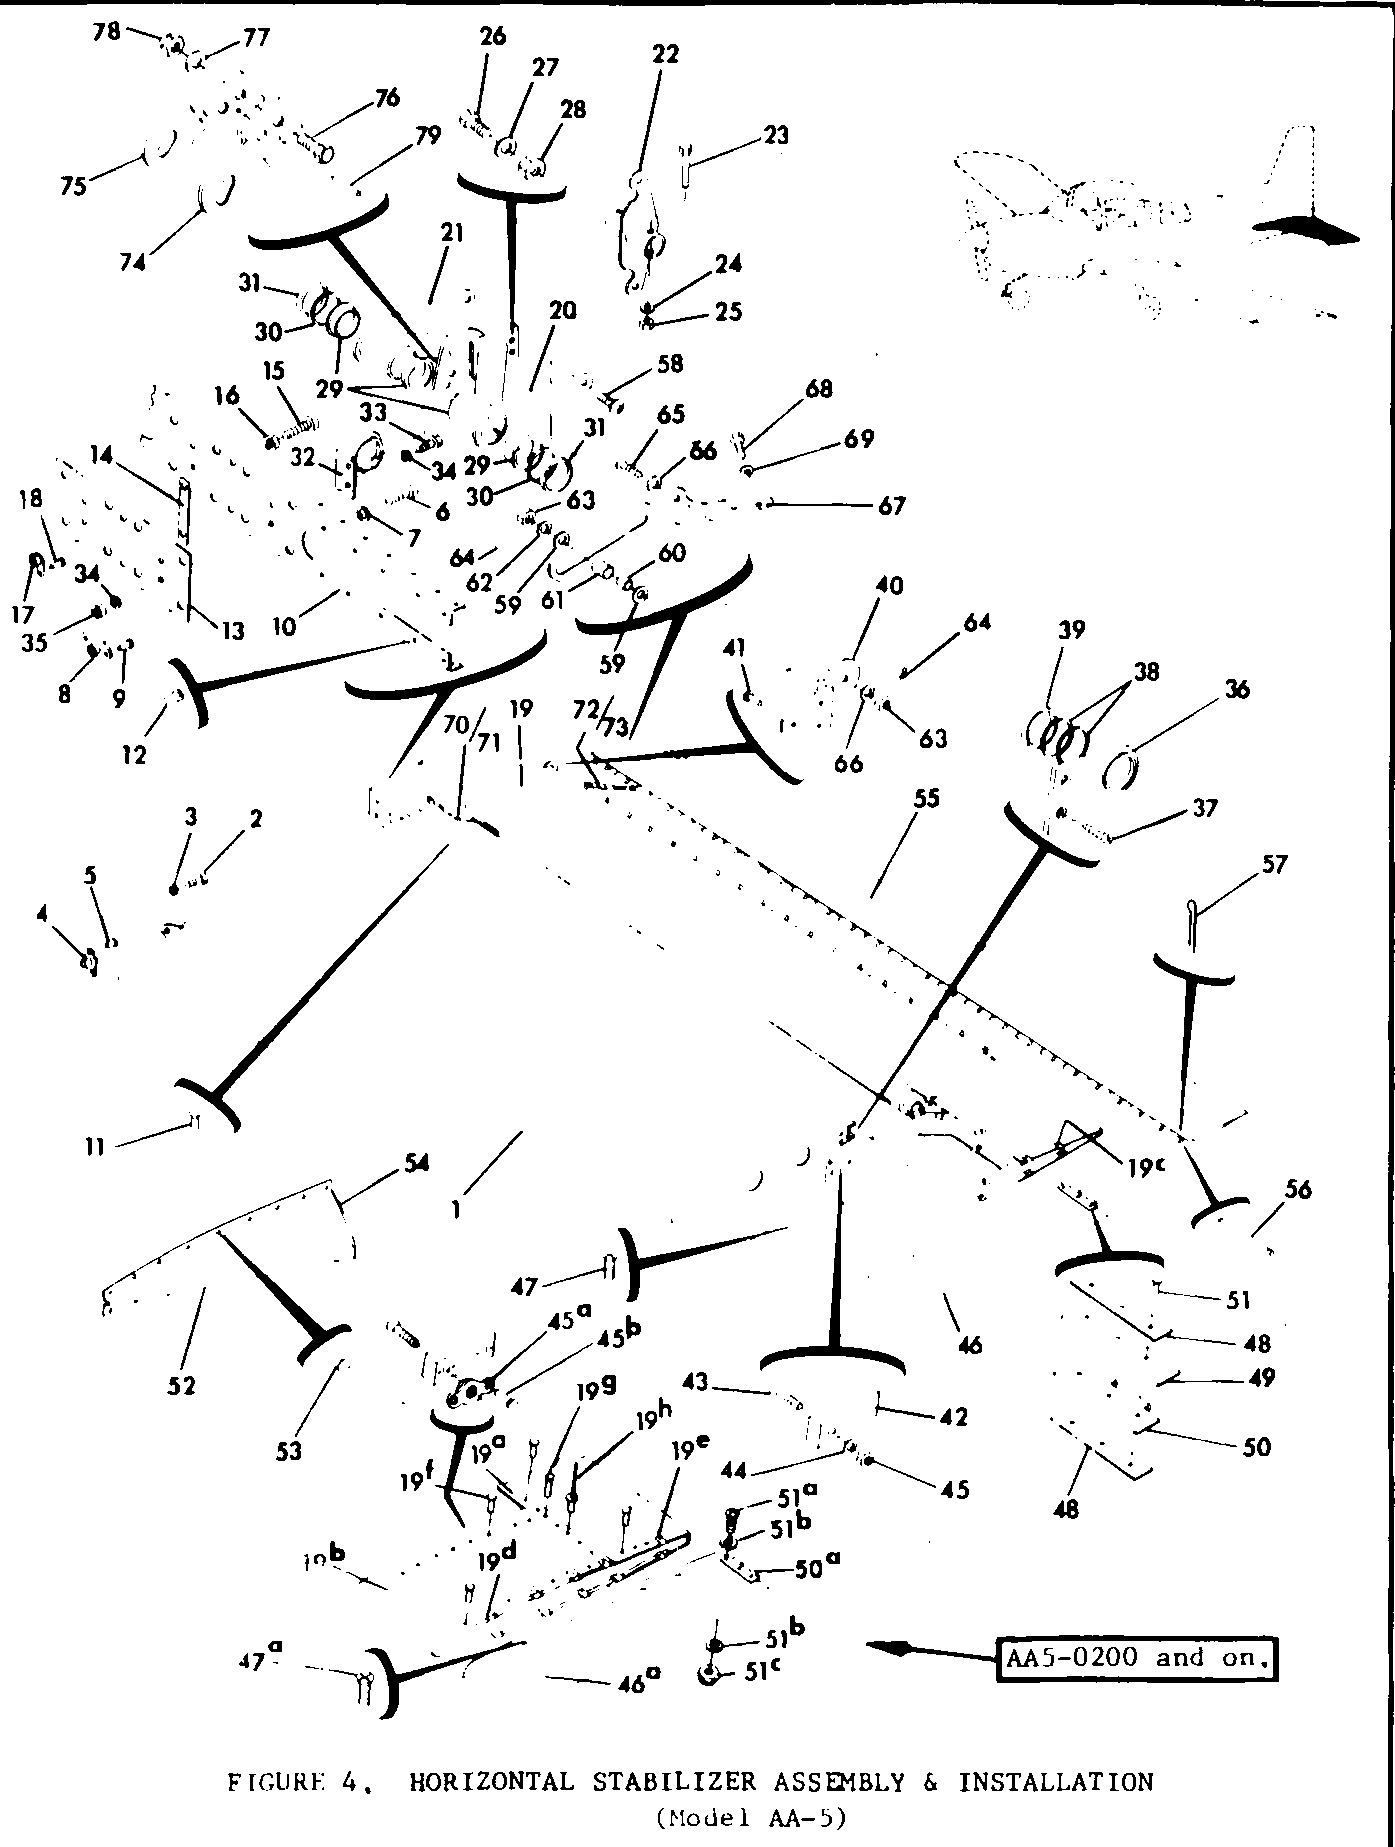 Parts Diagram Figure 4 Horizontal Stabilizer Model AA5